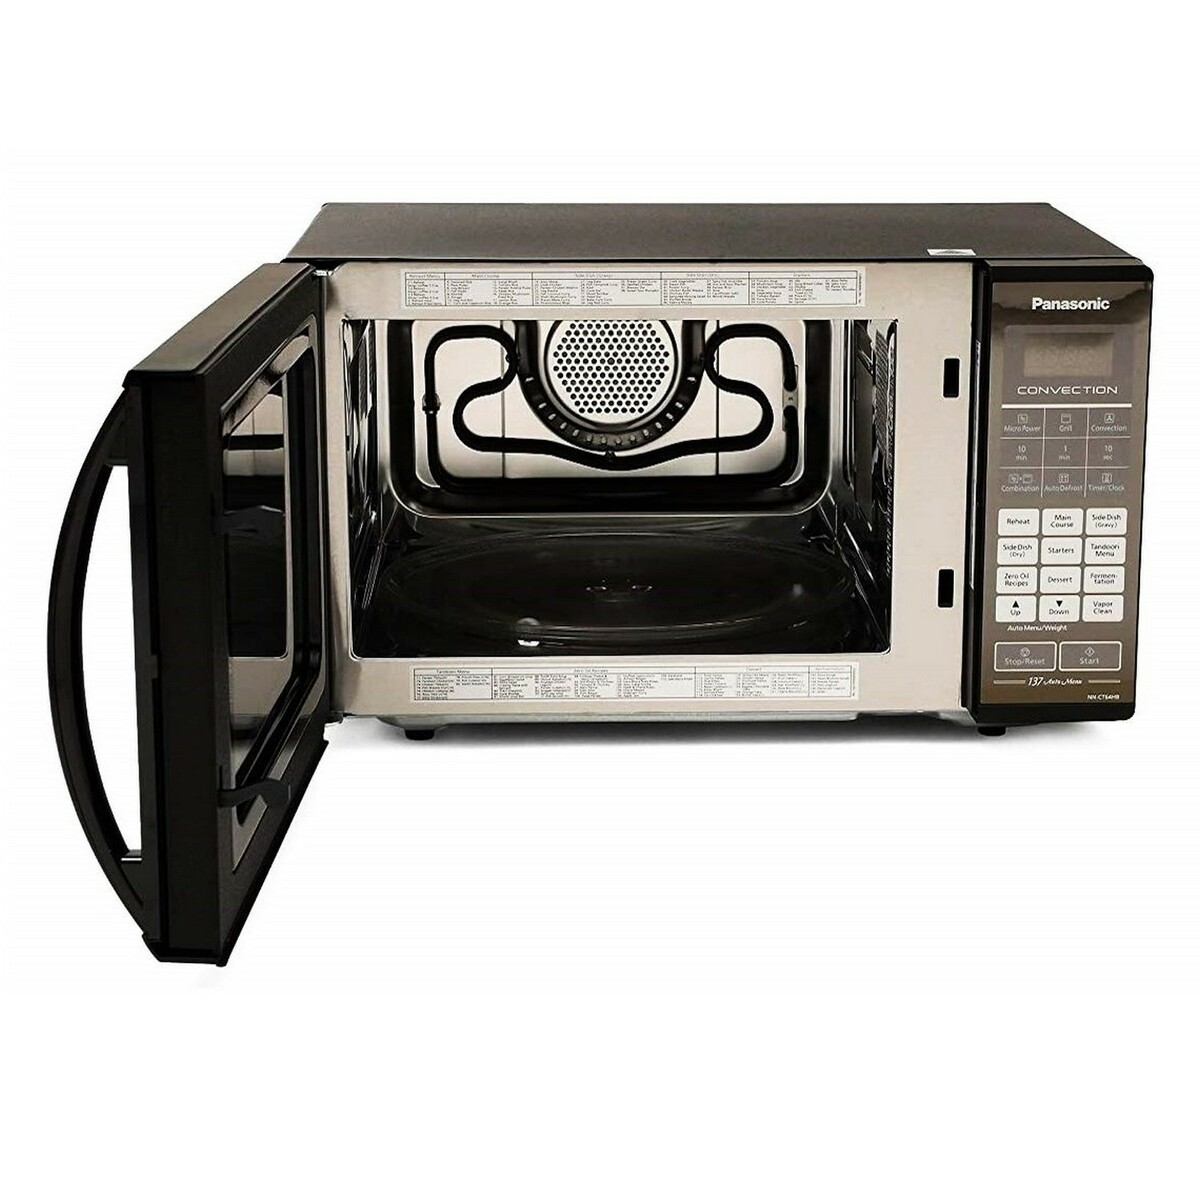 Panasonic Microwave Oven CT64HBFDG 27Ltr